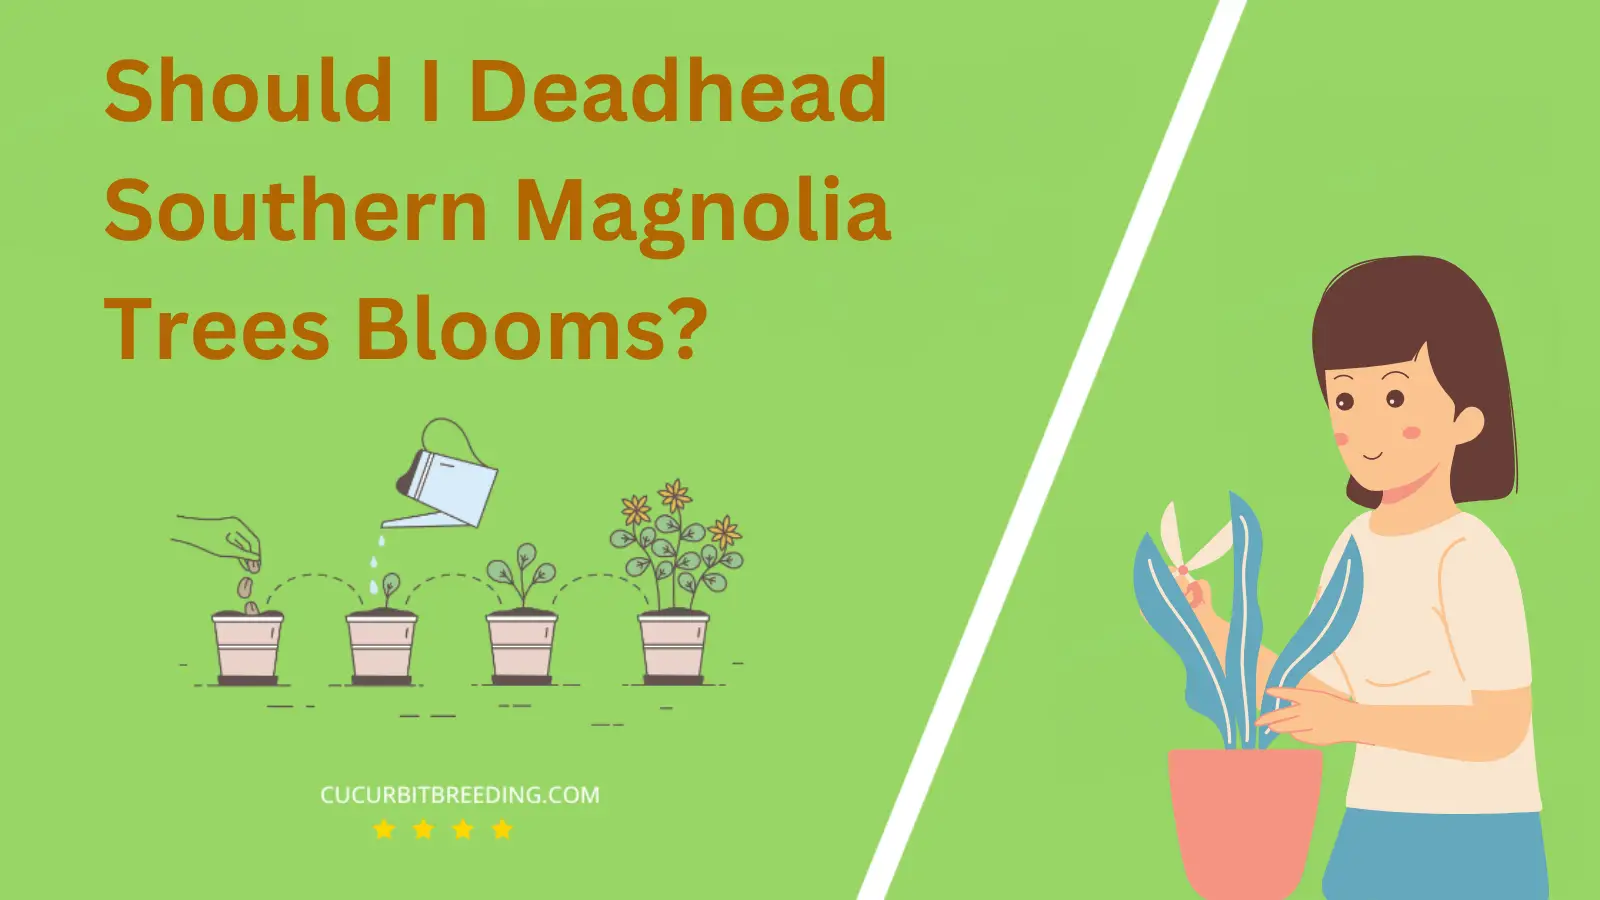 Should I Deadhead Southern Magnolia Trees Blooms?